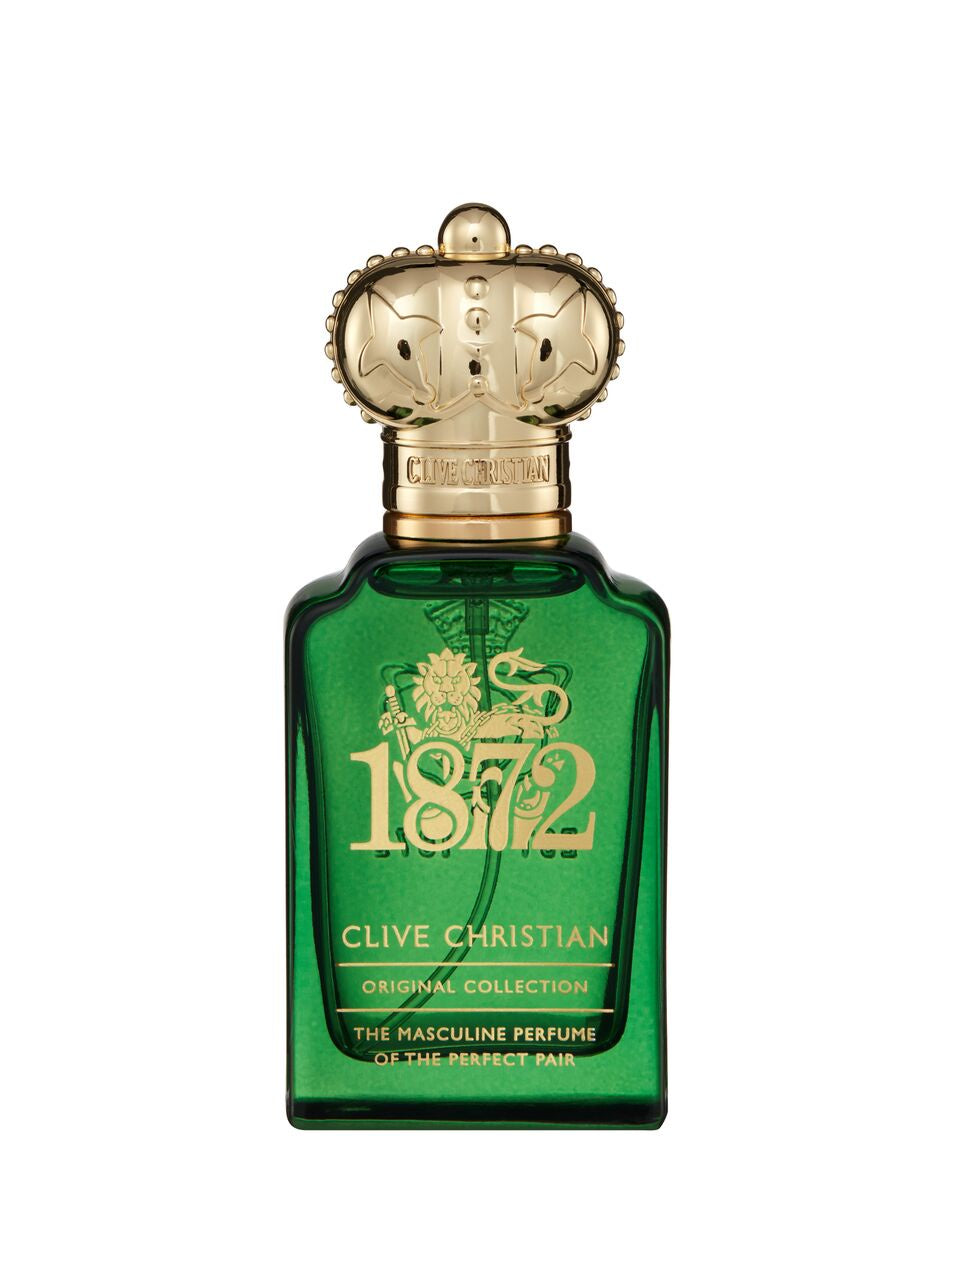 Clive Christian 1872 Masculine 50ml